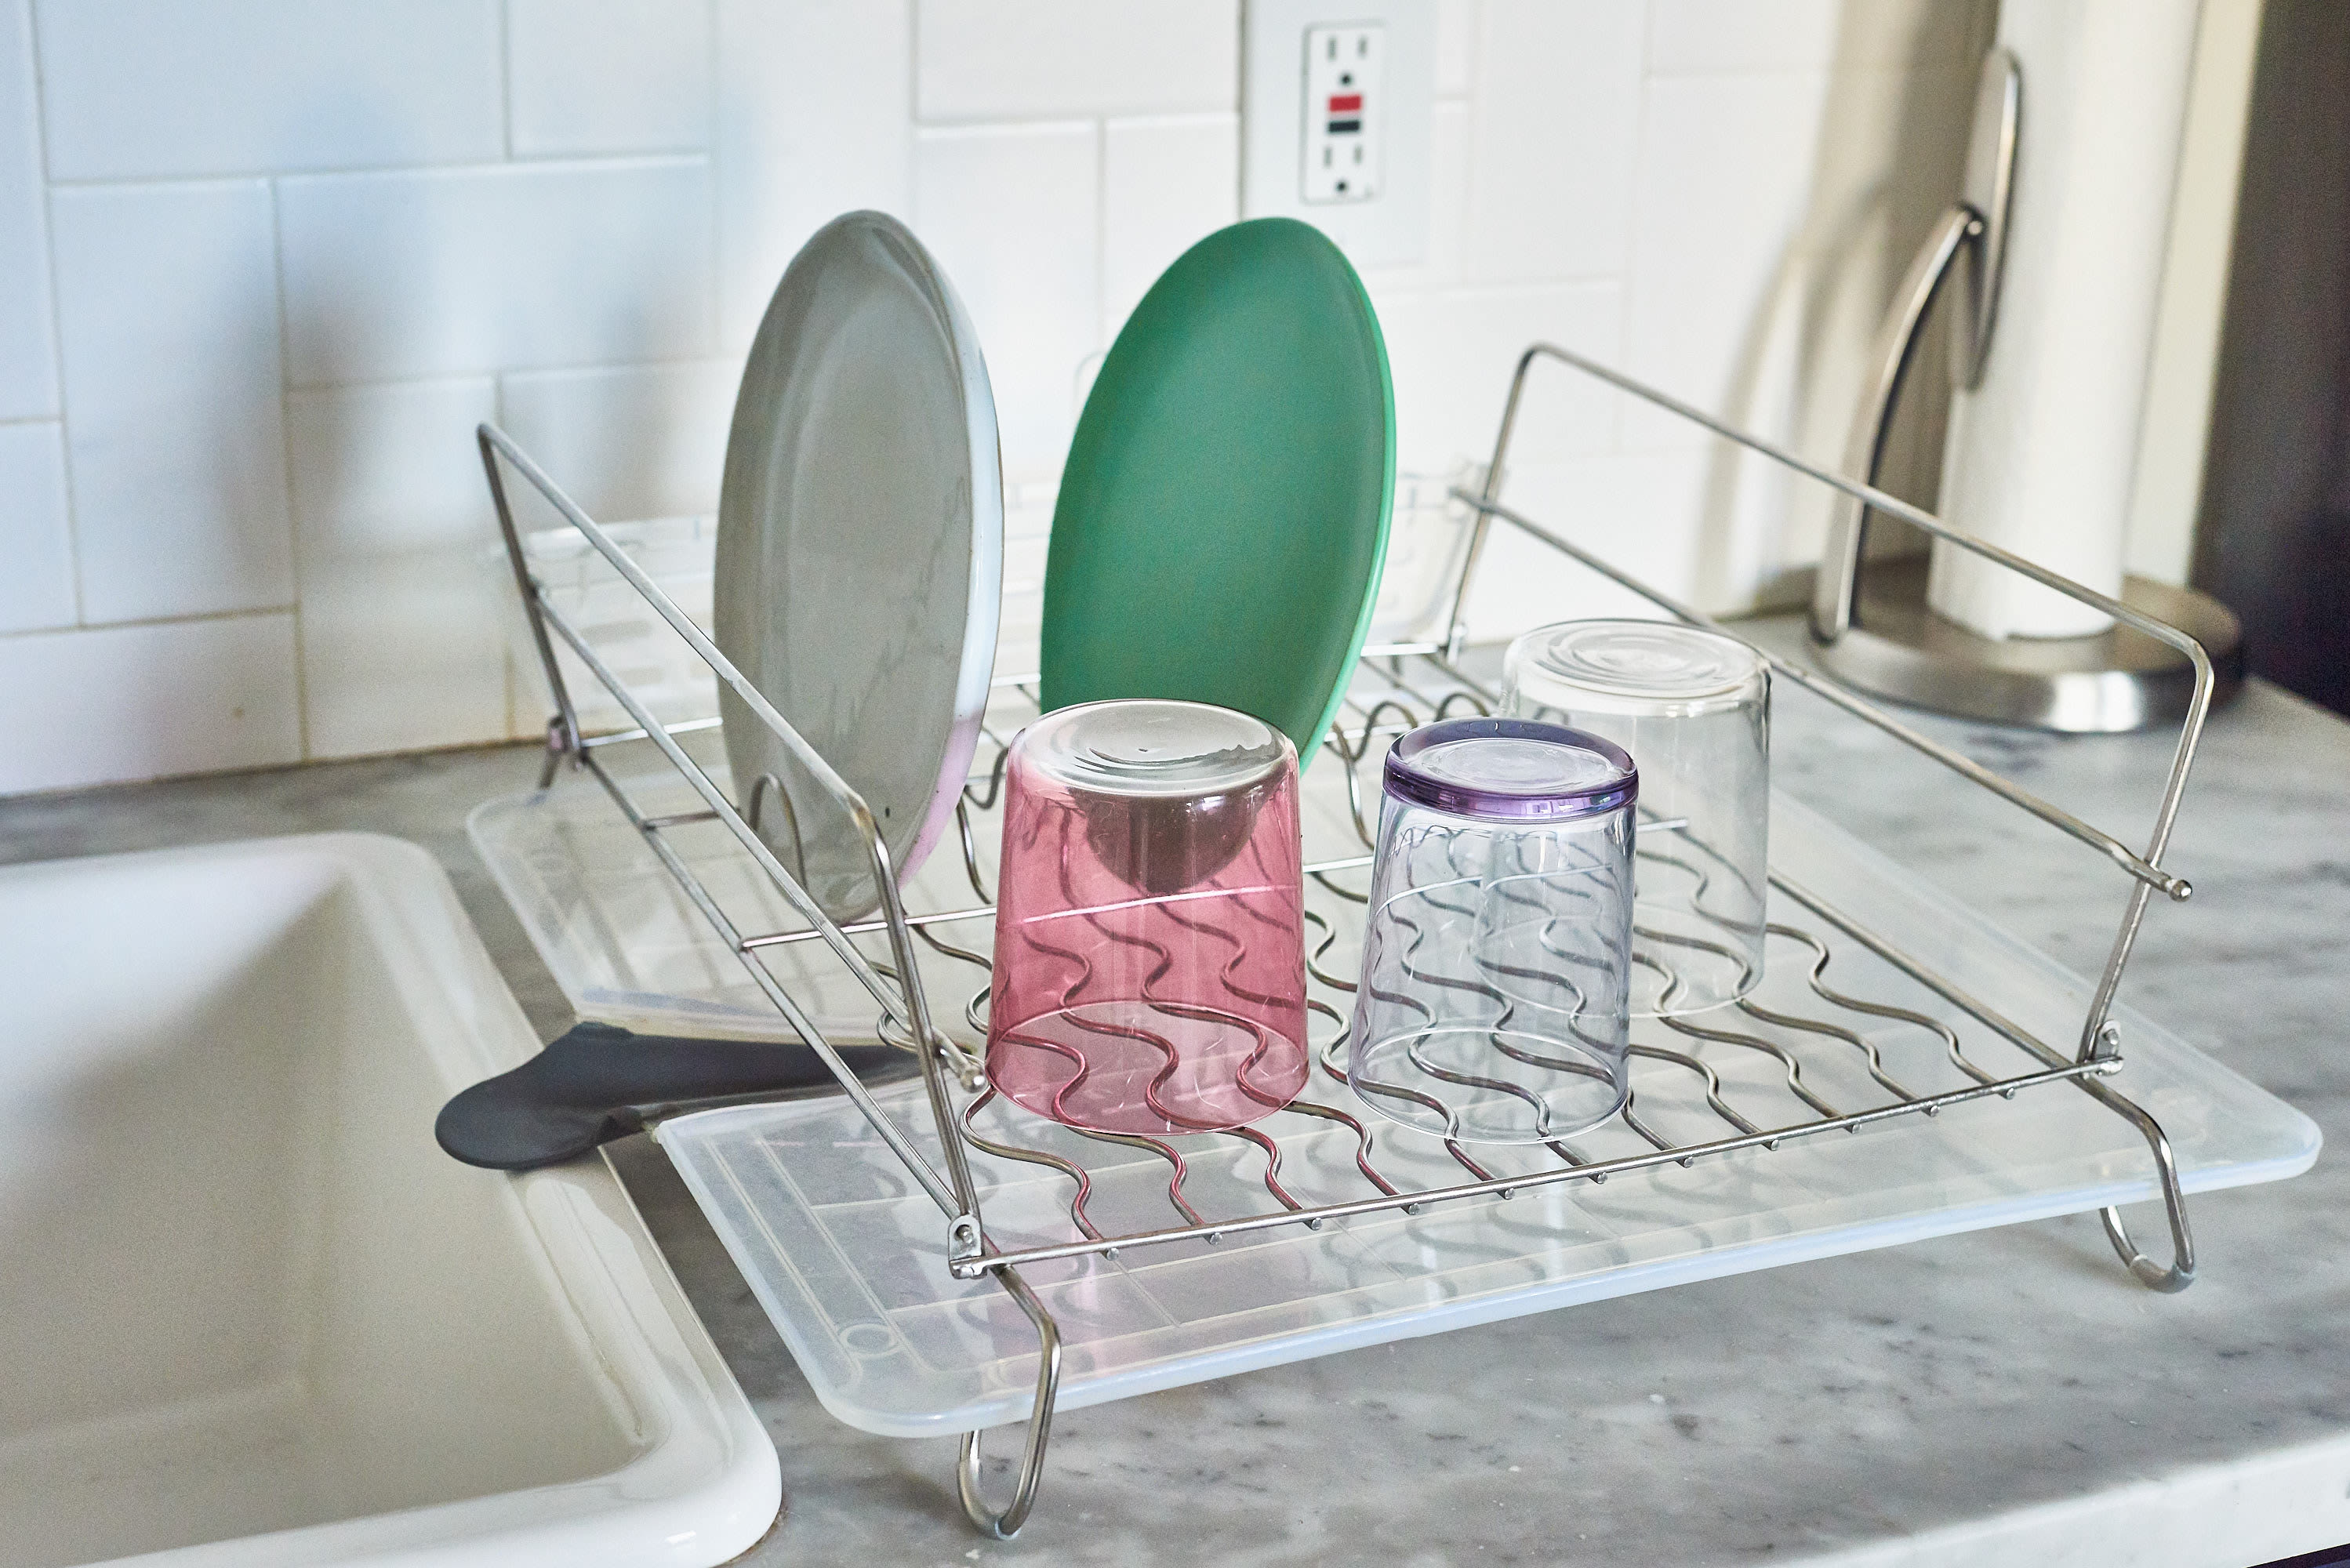 Emergency Dishwasher Detergent Alternatives